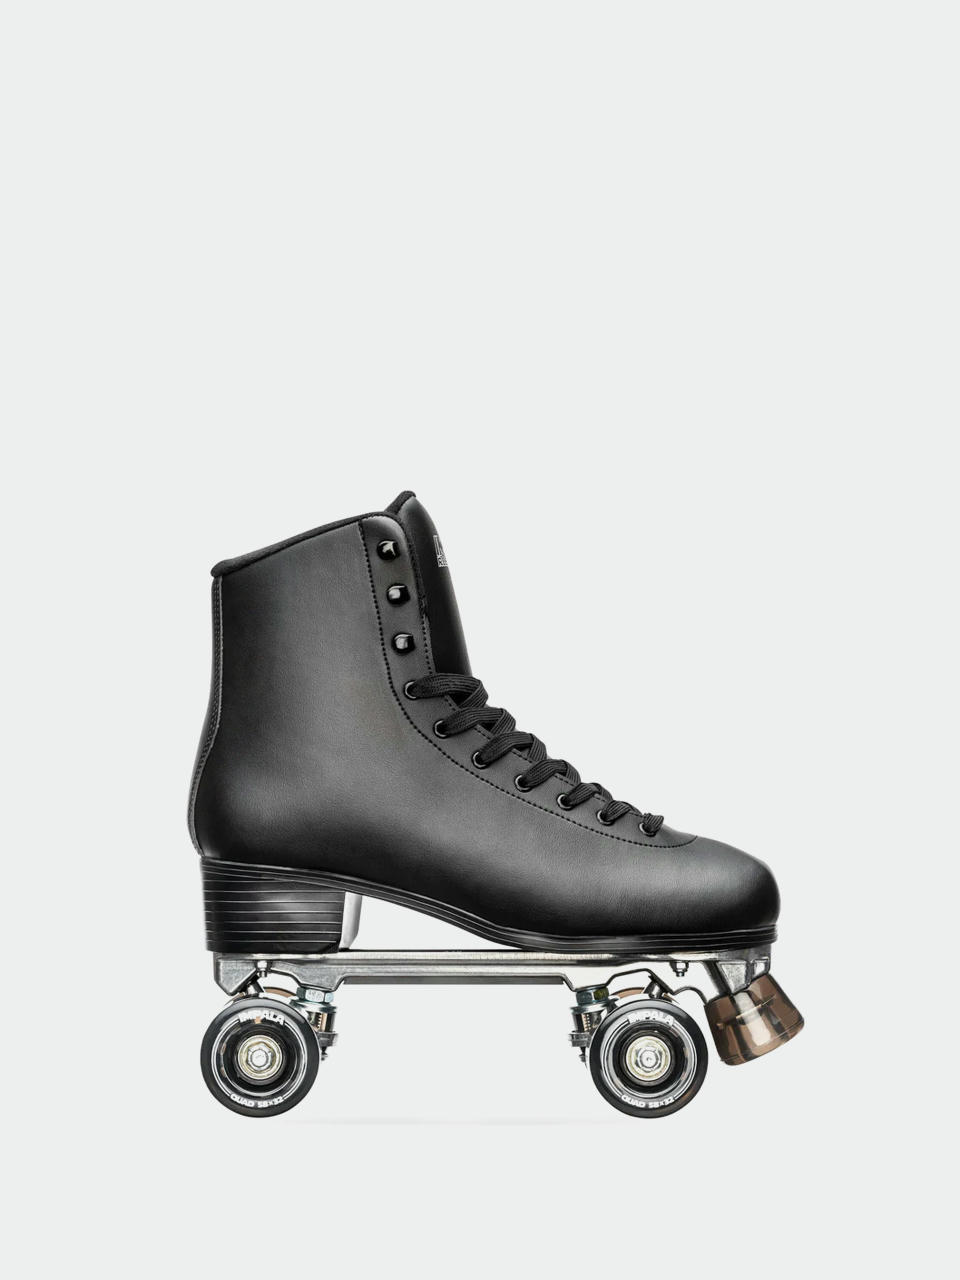 Impala Quad Skate Roller skates (black)